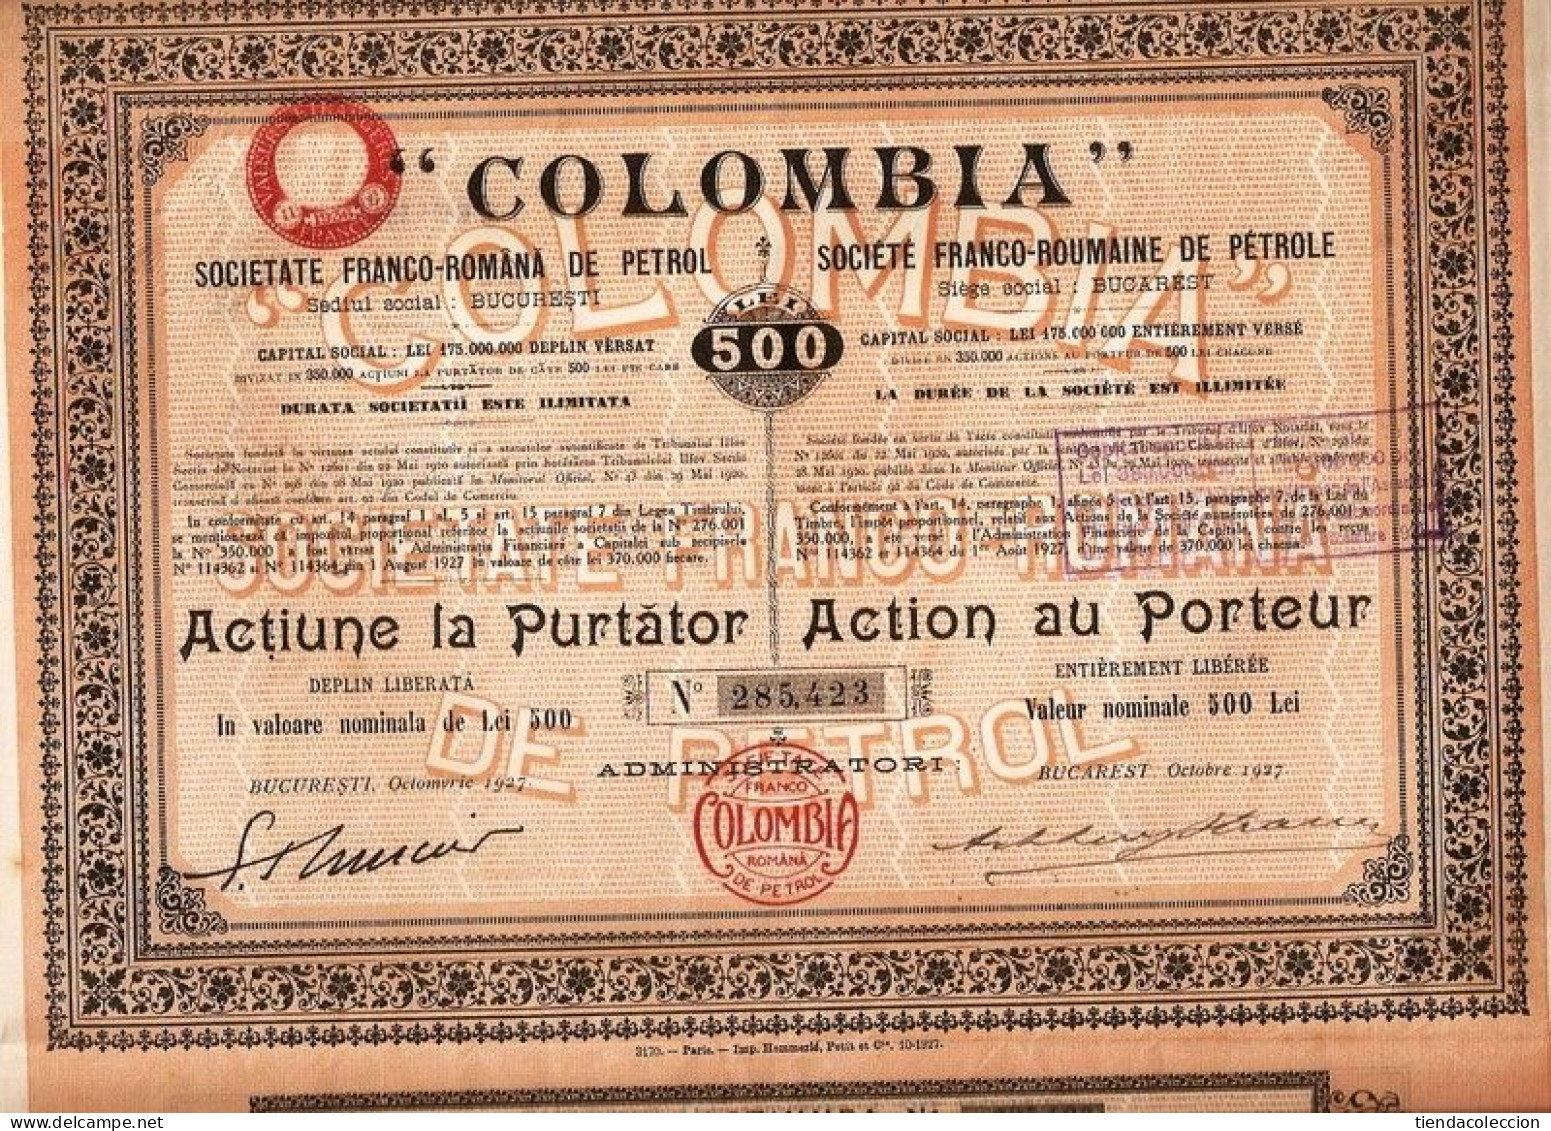 "COLOMBIA" SOCIEDA FRANCO-RUMANA DE PETROLEO - Oil